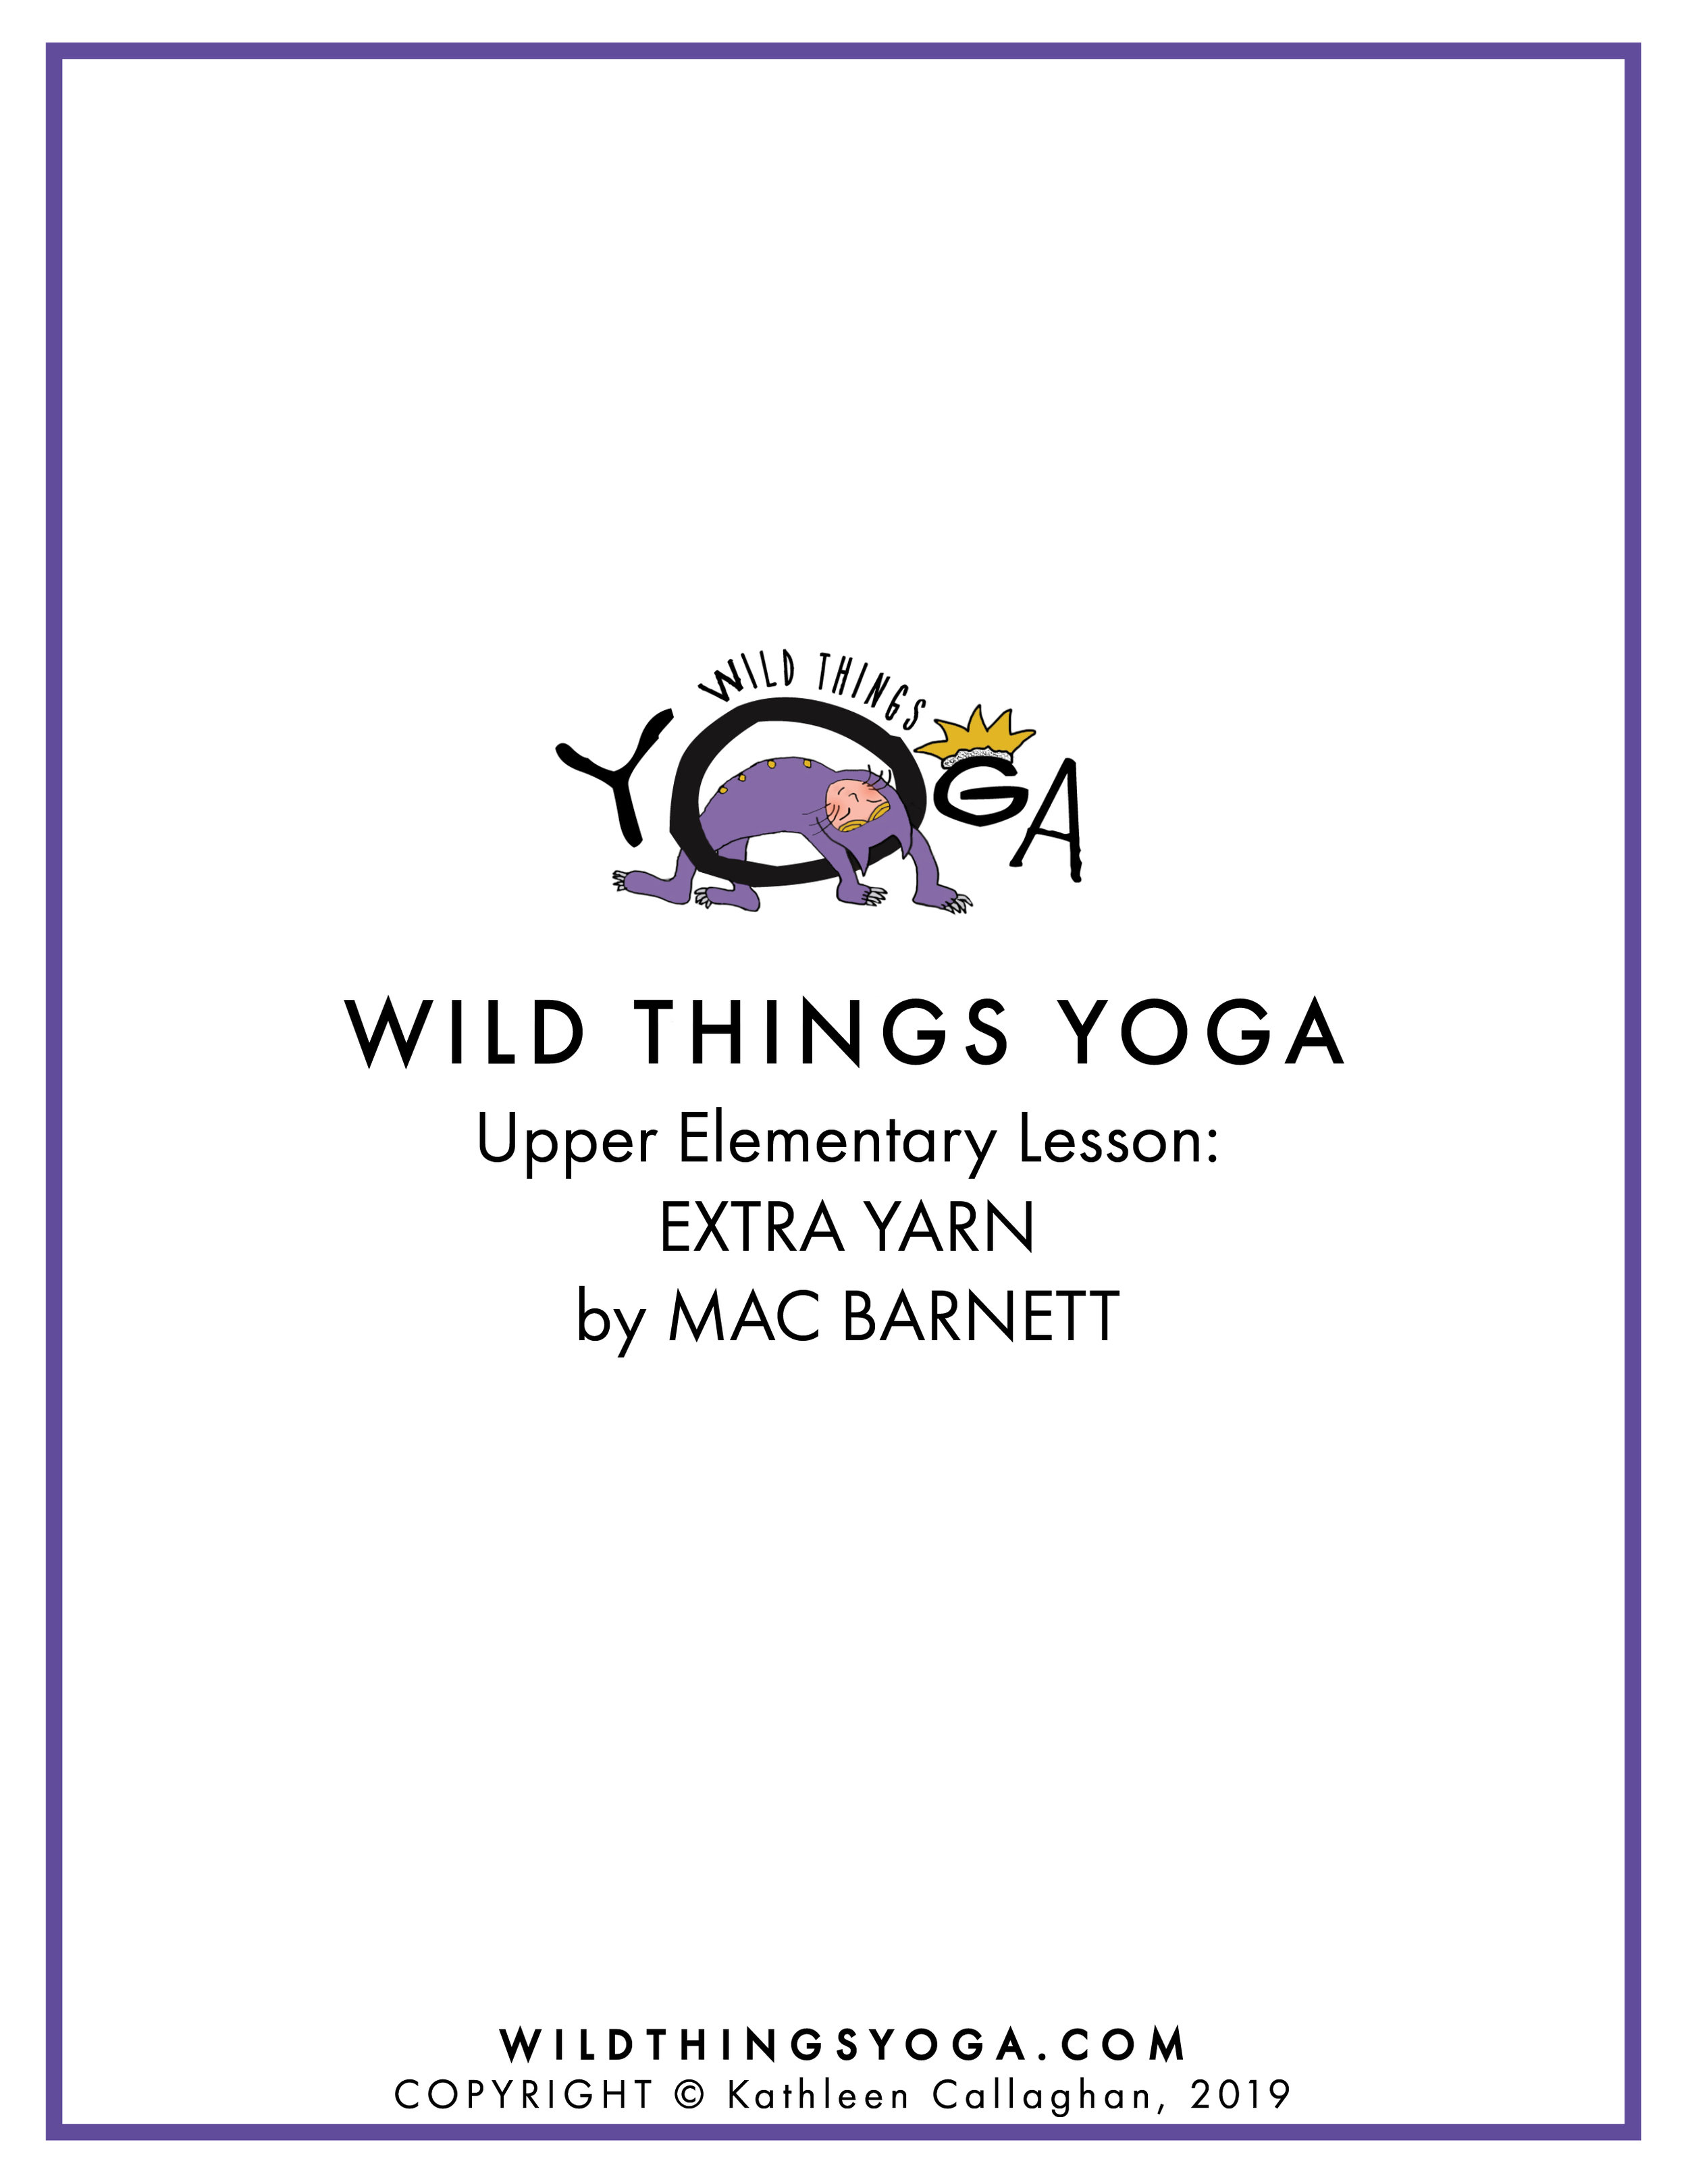 Upper Elementary Lesson Extra Yarn Wild Things Yoga